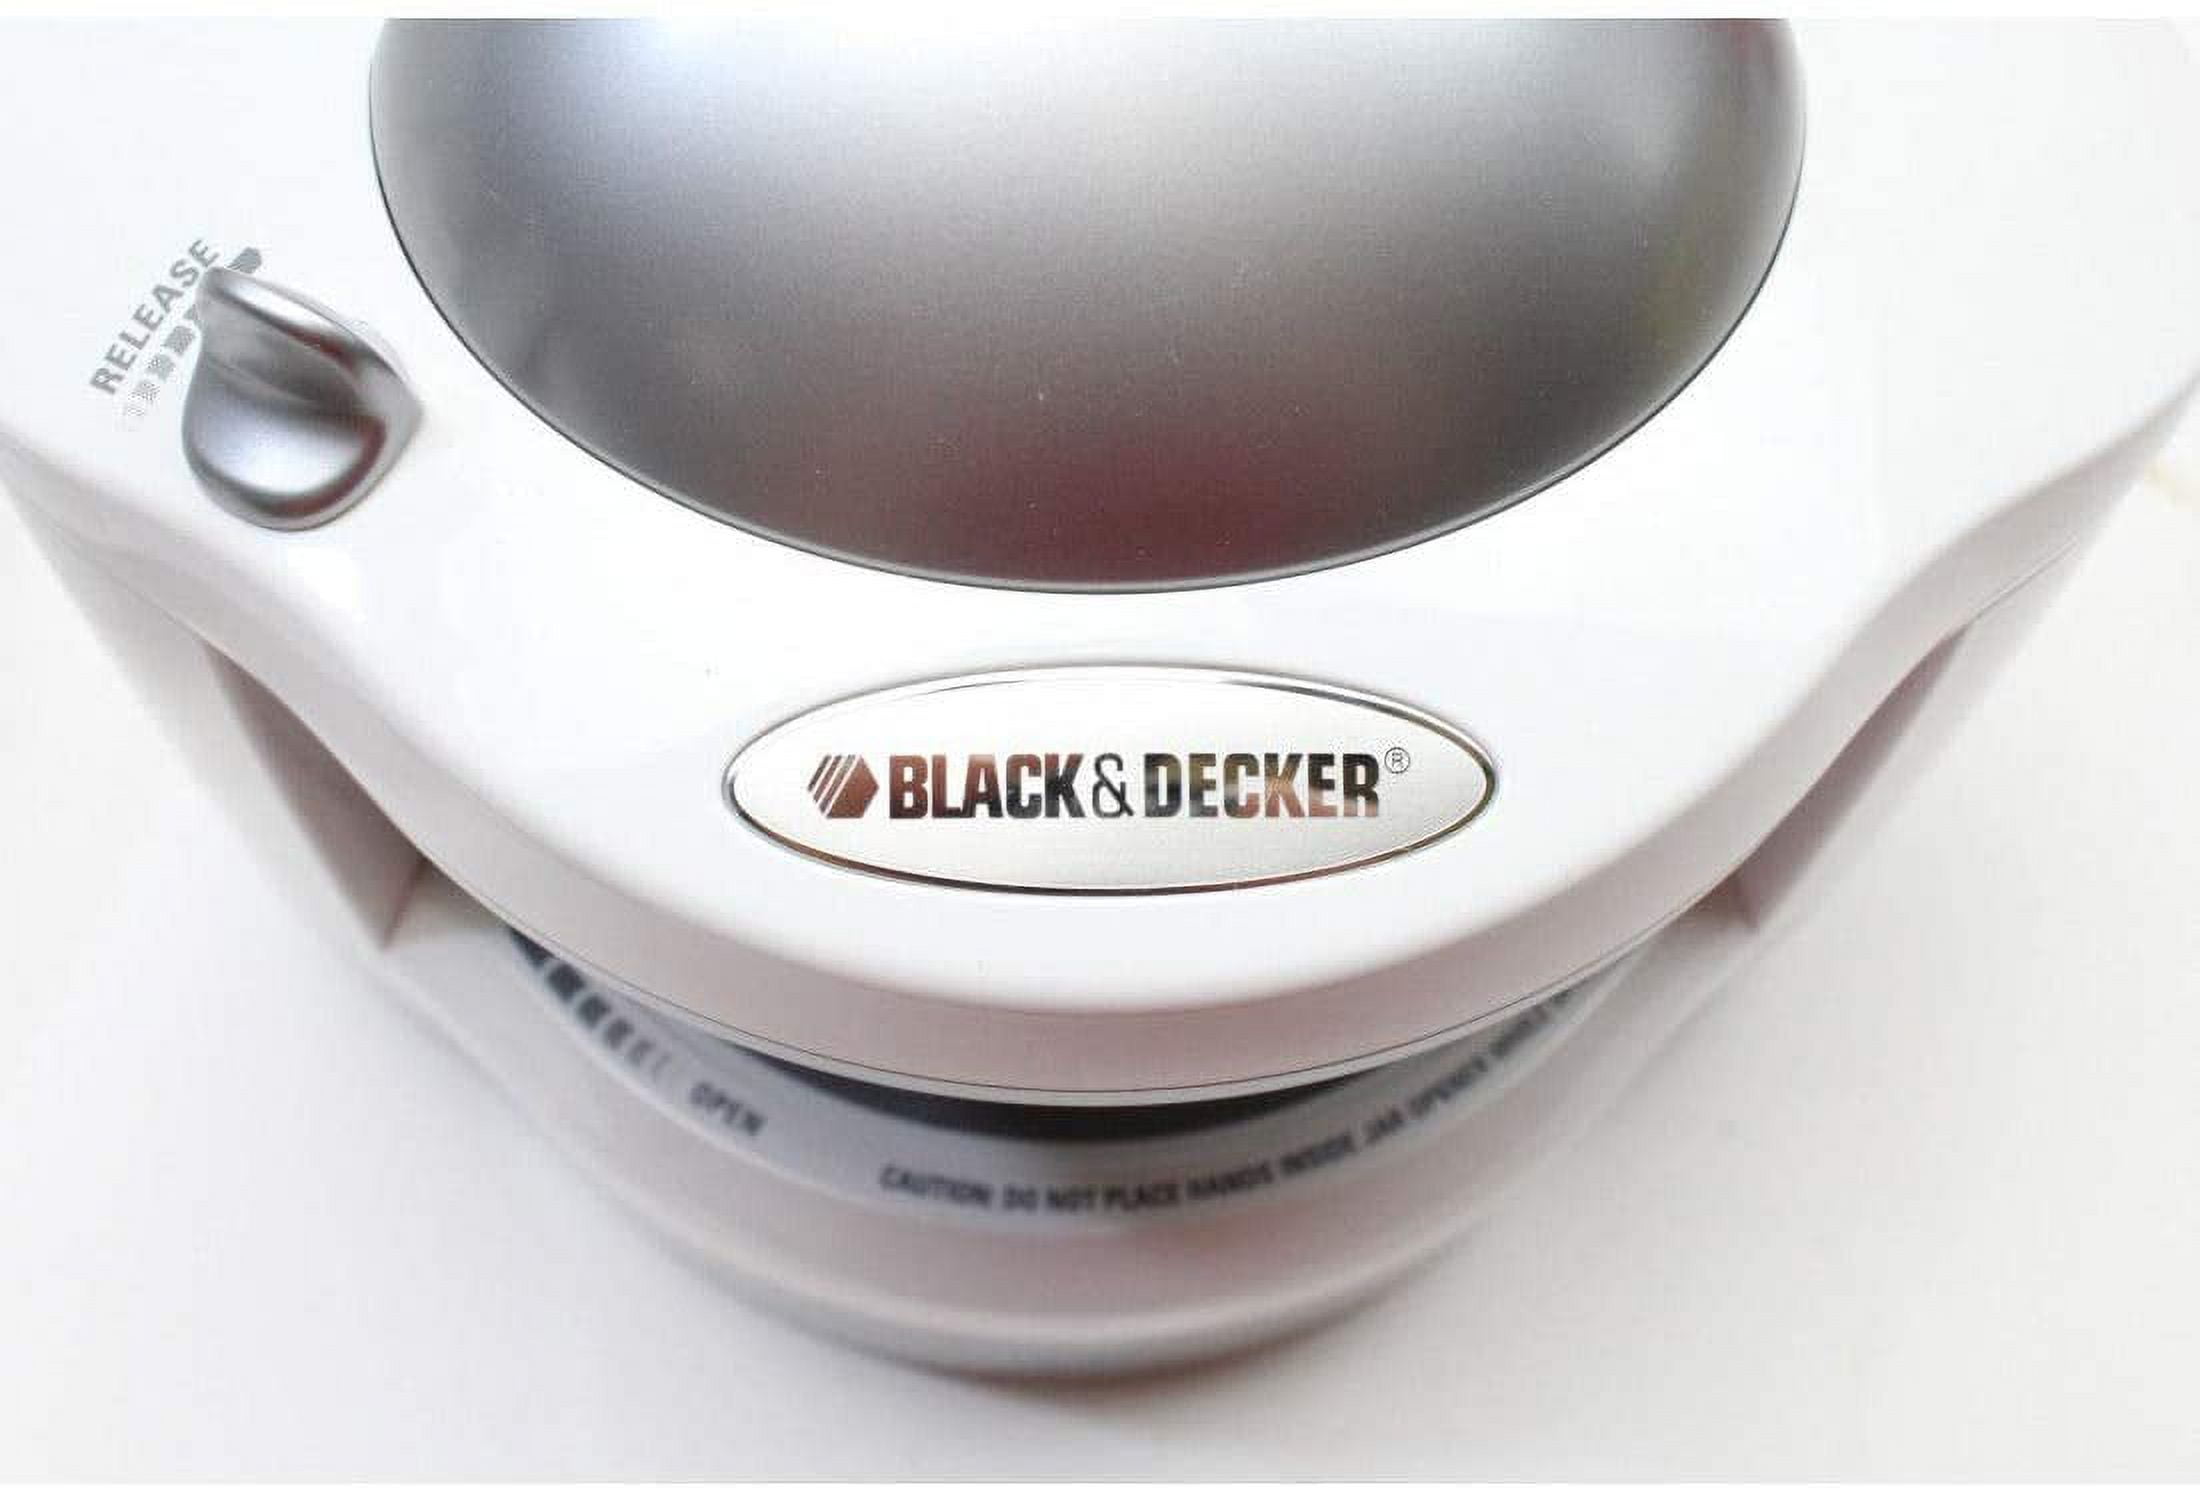 Black & Decker Home - Lids Off Jar Opener Ultra - JW260 - White